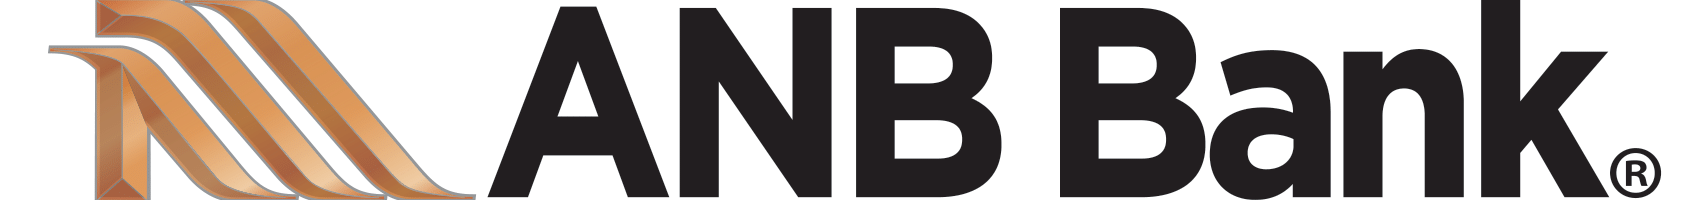 ANB Bank logo-1.png